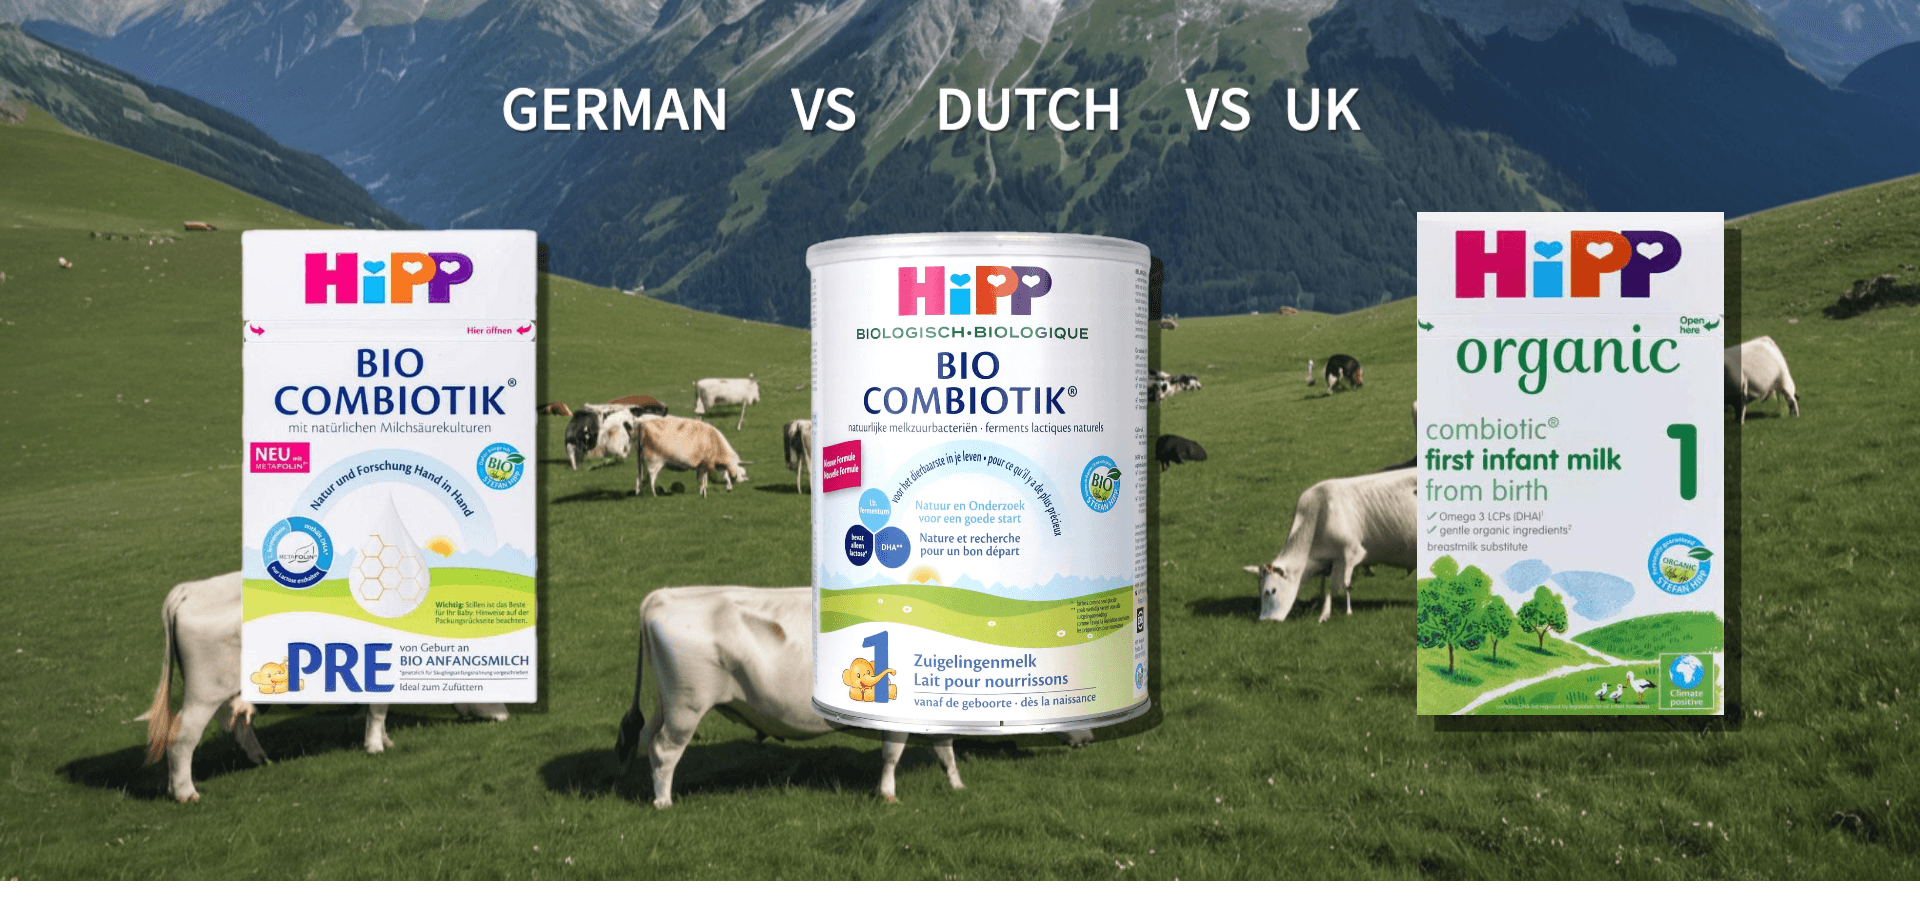 HiPP Baby Formula: German vs. Dutch vs. UK